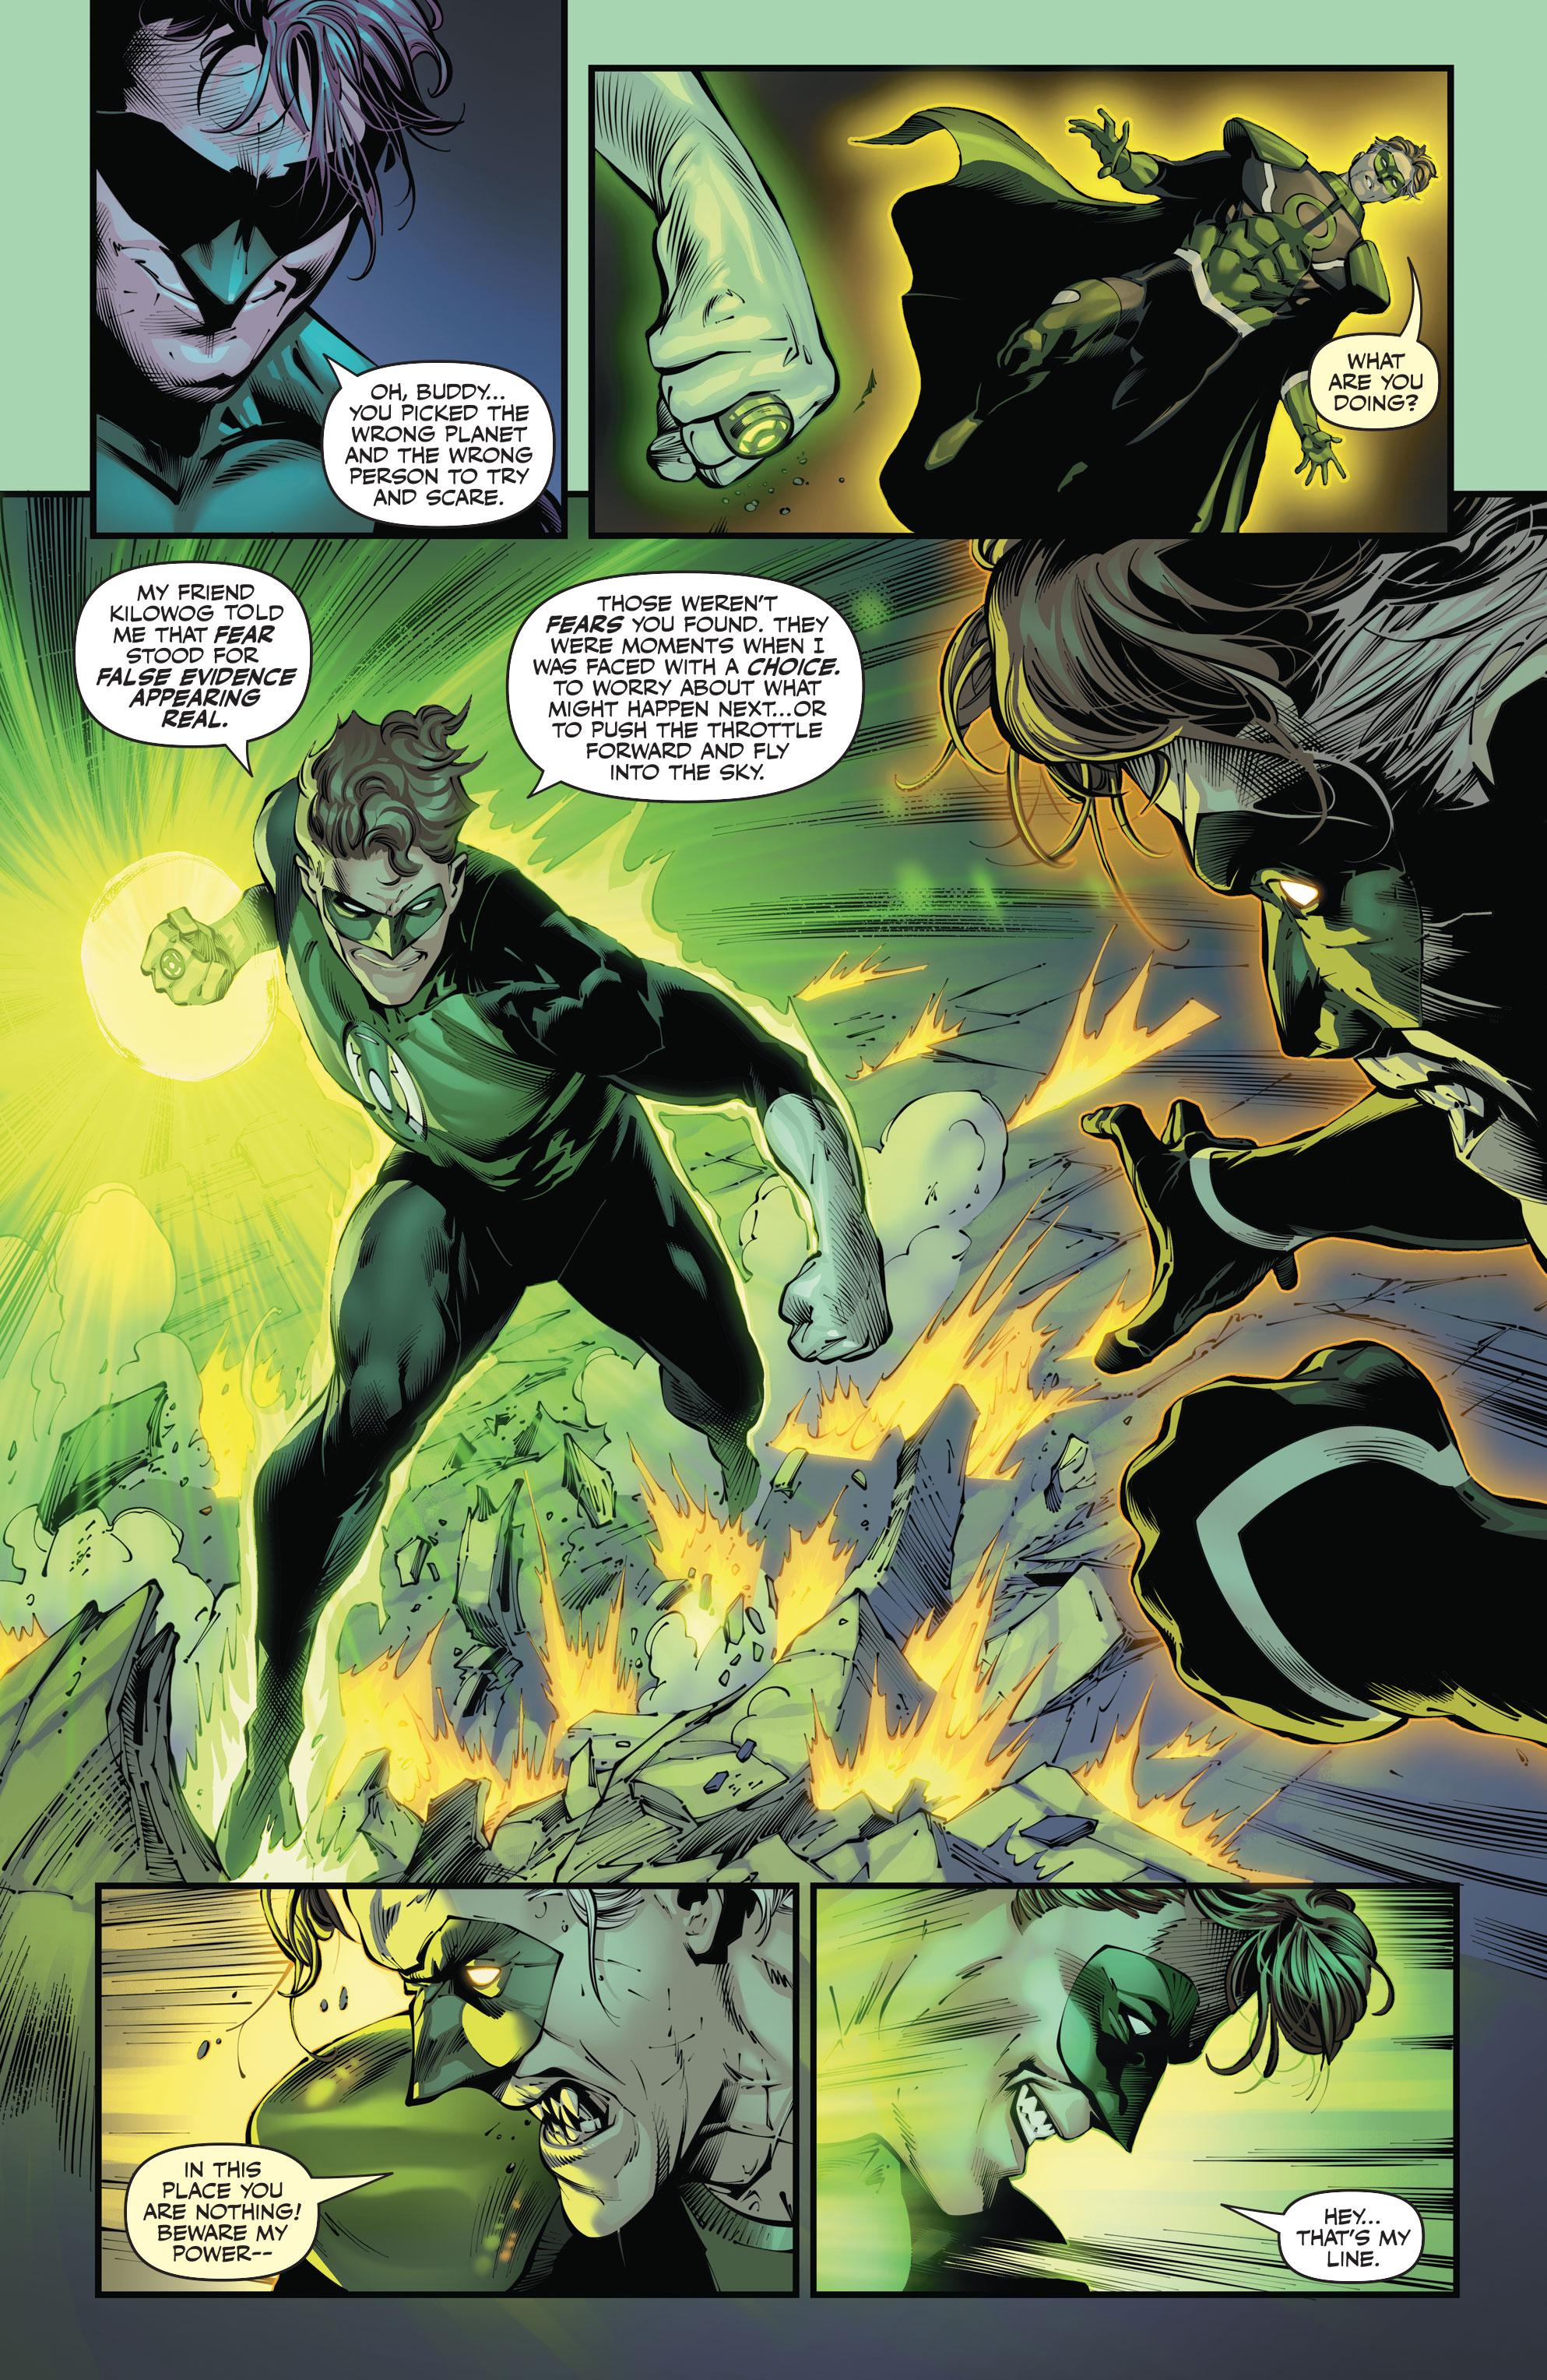 Obrázek z knihy Knight Terrors: Green Lantern #2